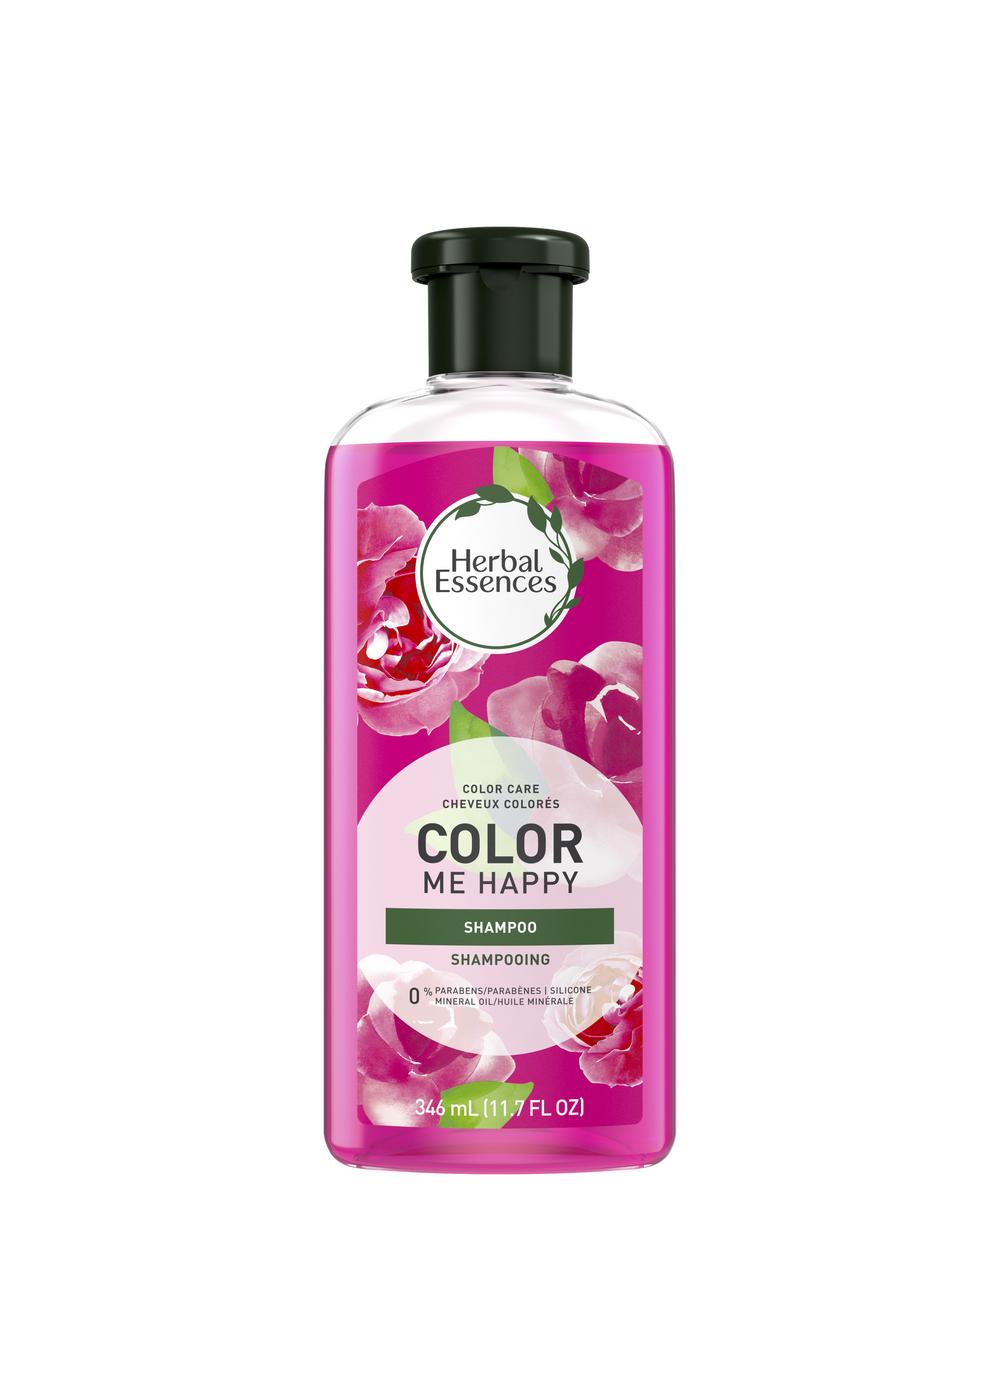 Herbal Essences Color Care Color Me Happy Shampoo; image 1 of 5